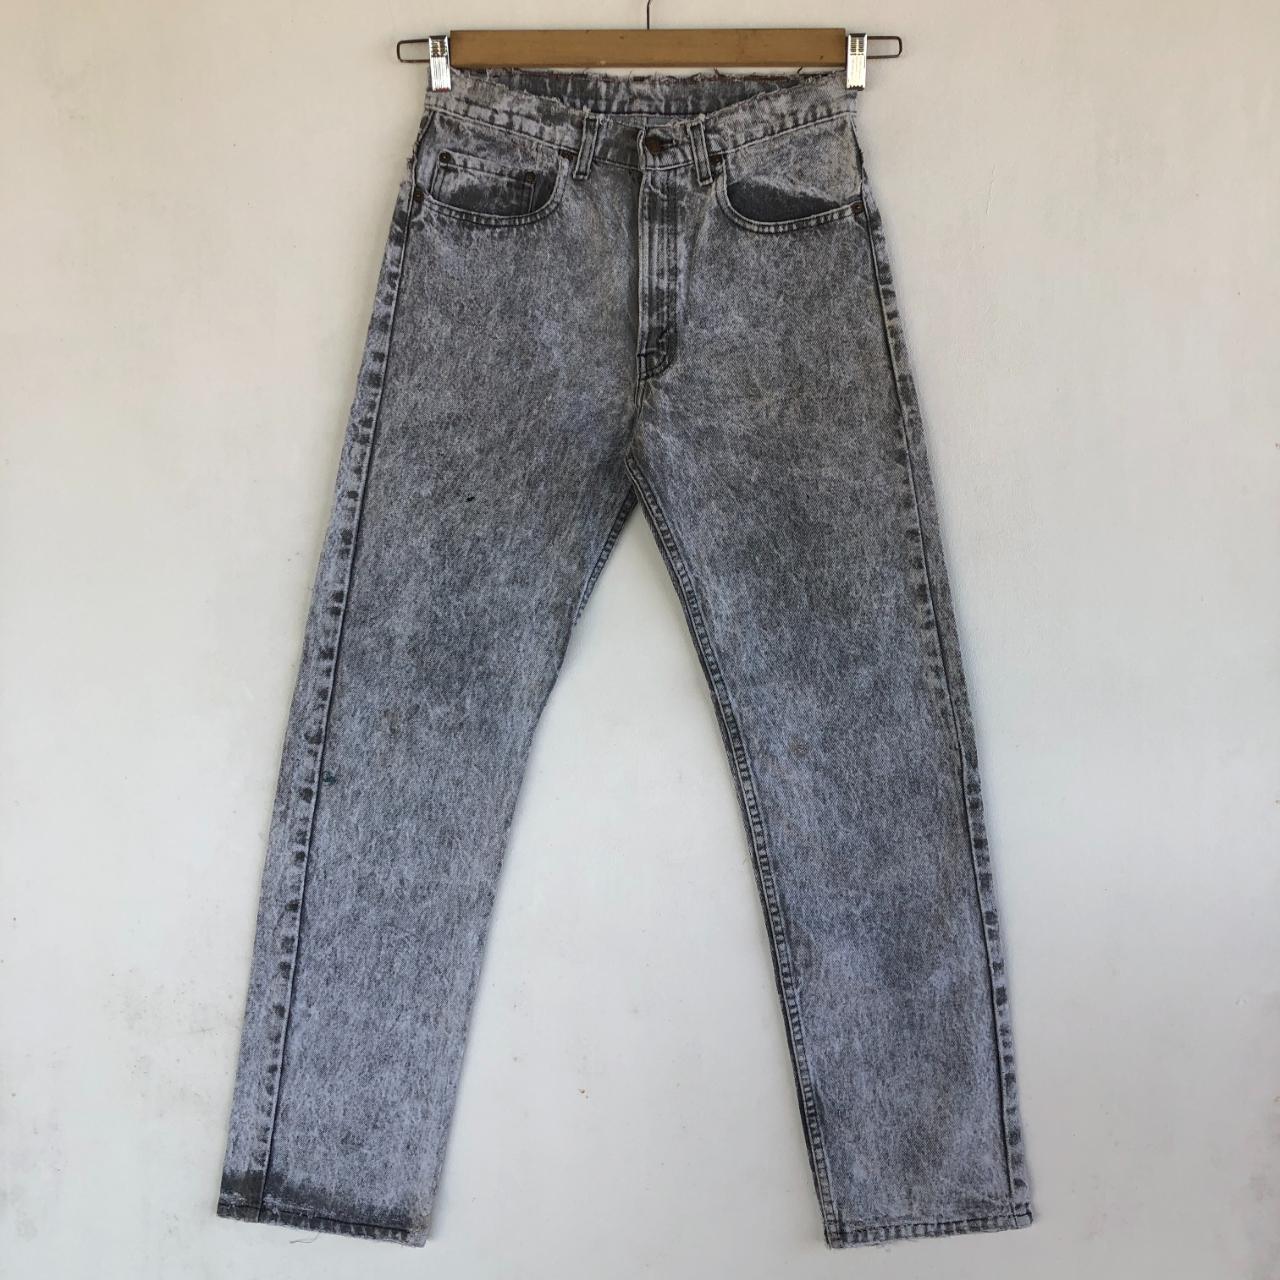 Vintage Levis Jeans Acid Wash Levis 505 Denim... - Depop